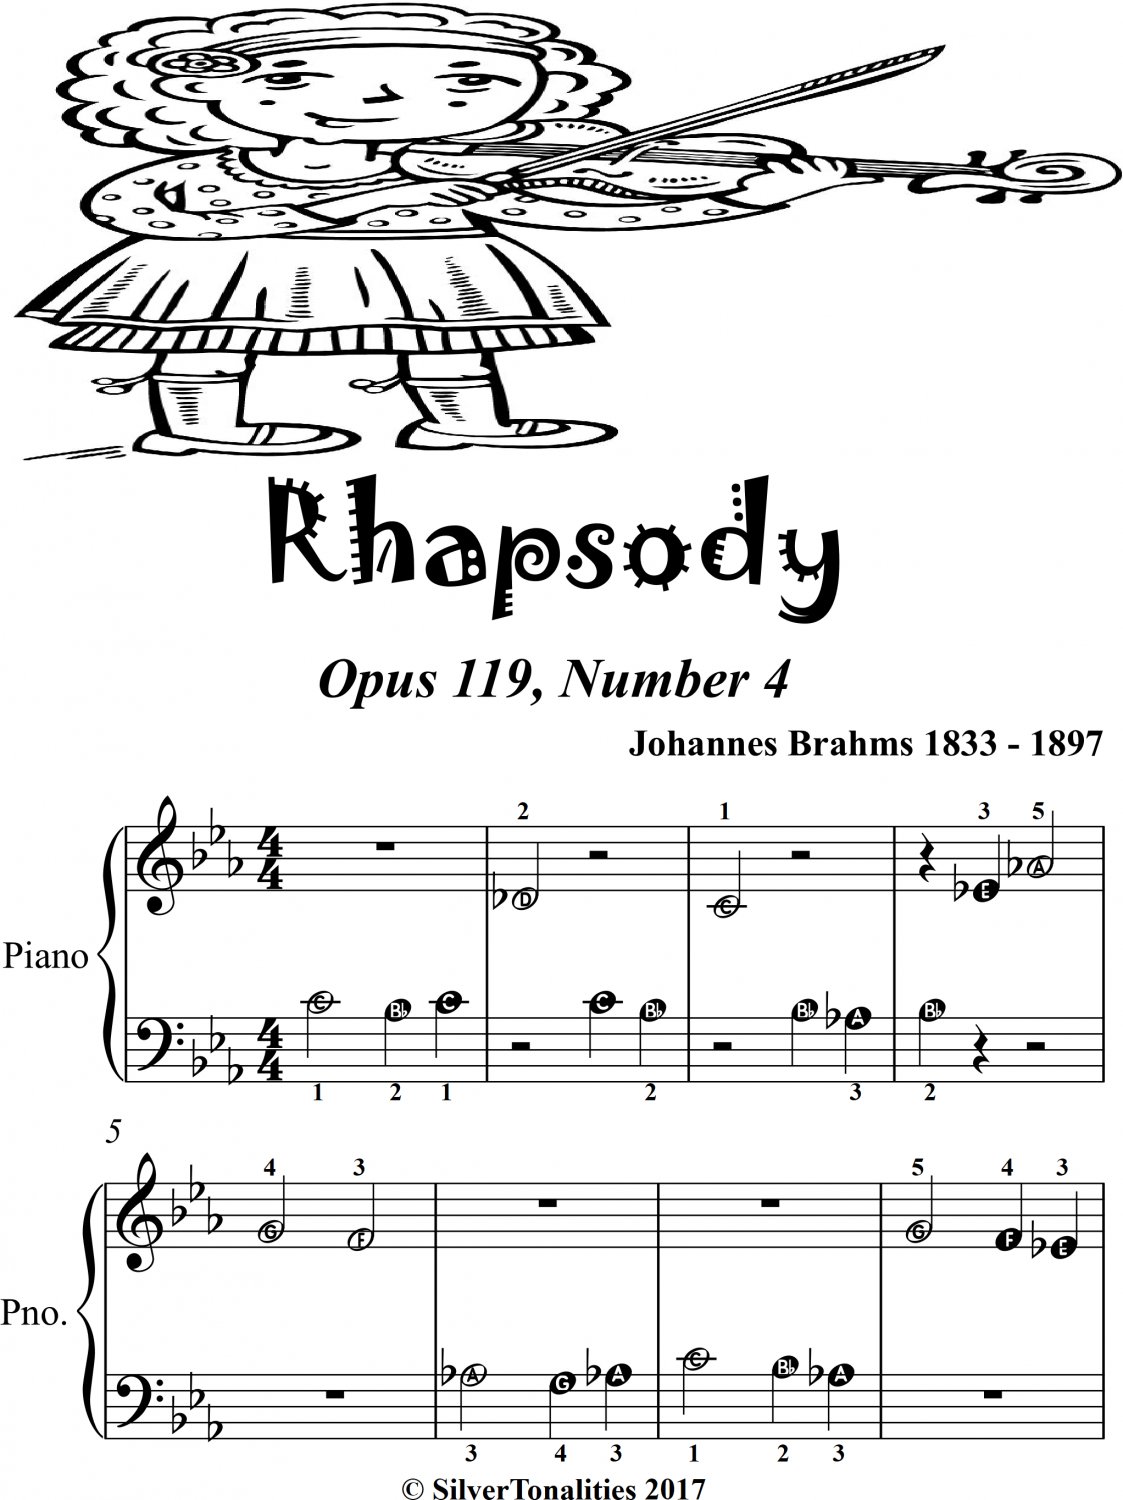 Rhapsody Opus 119 Number 4 Beginner Piano Sheet Music